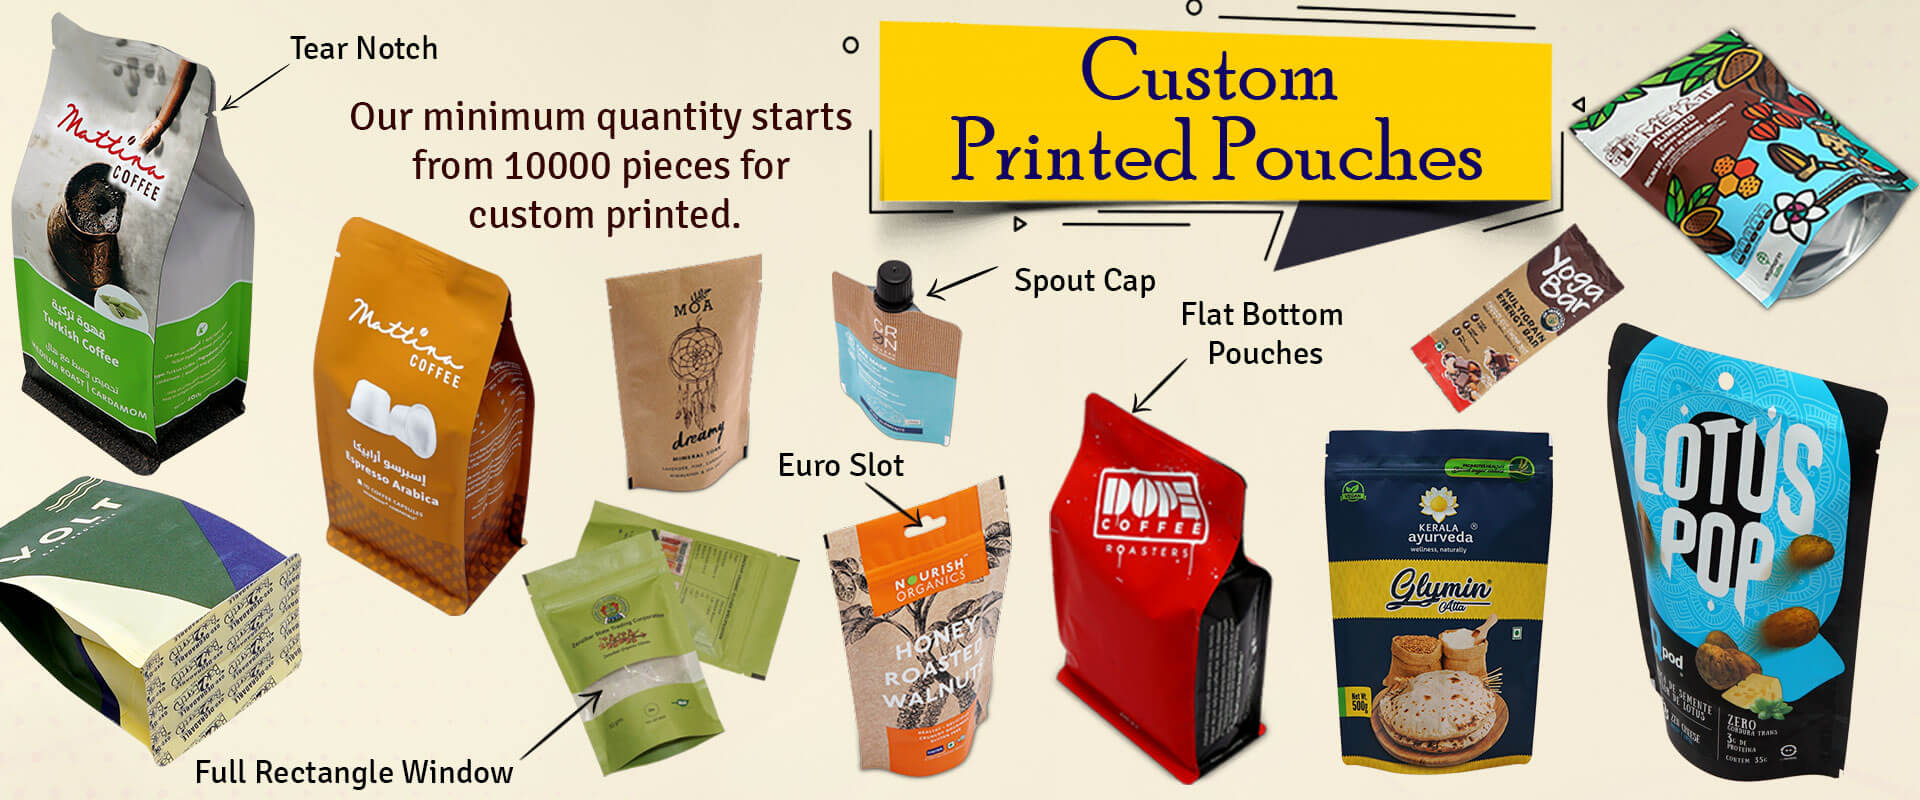 Custom Printed Pouches